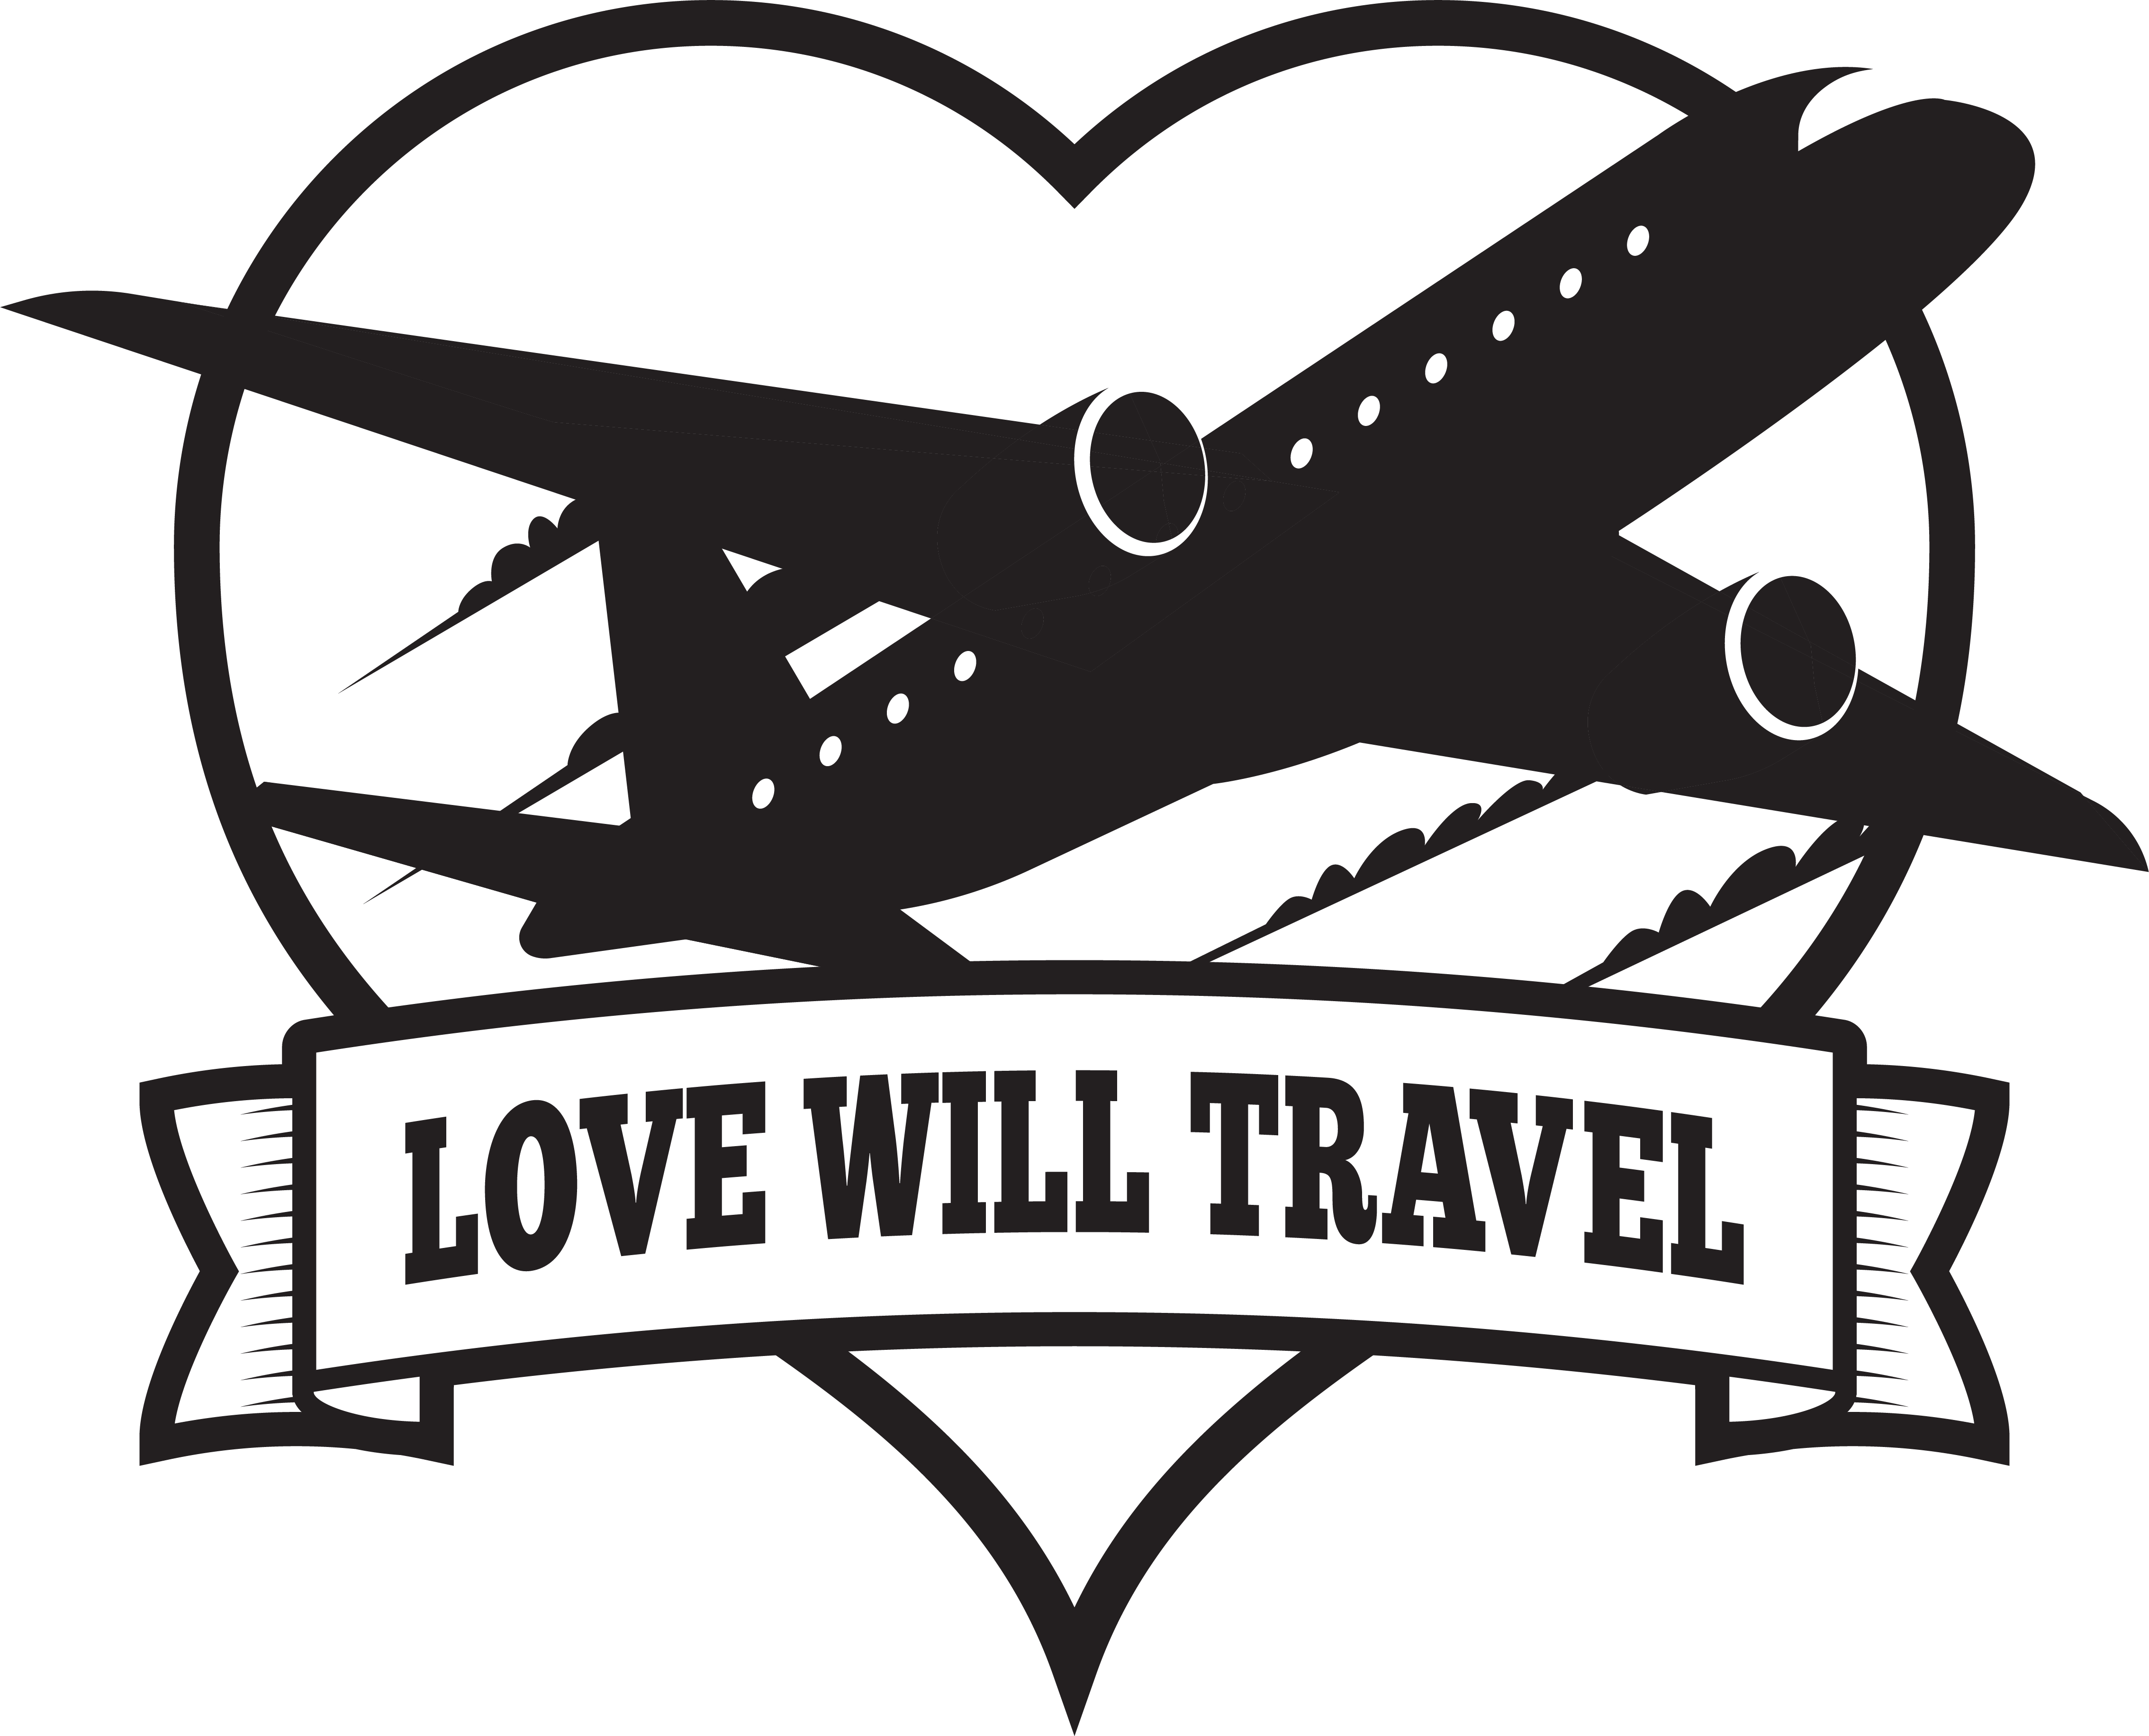 Love will travel